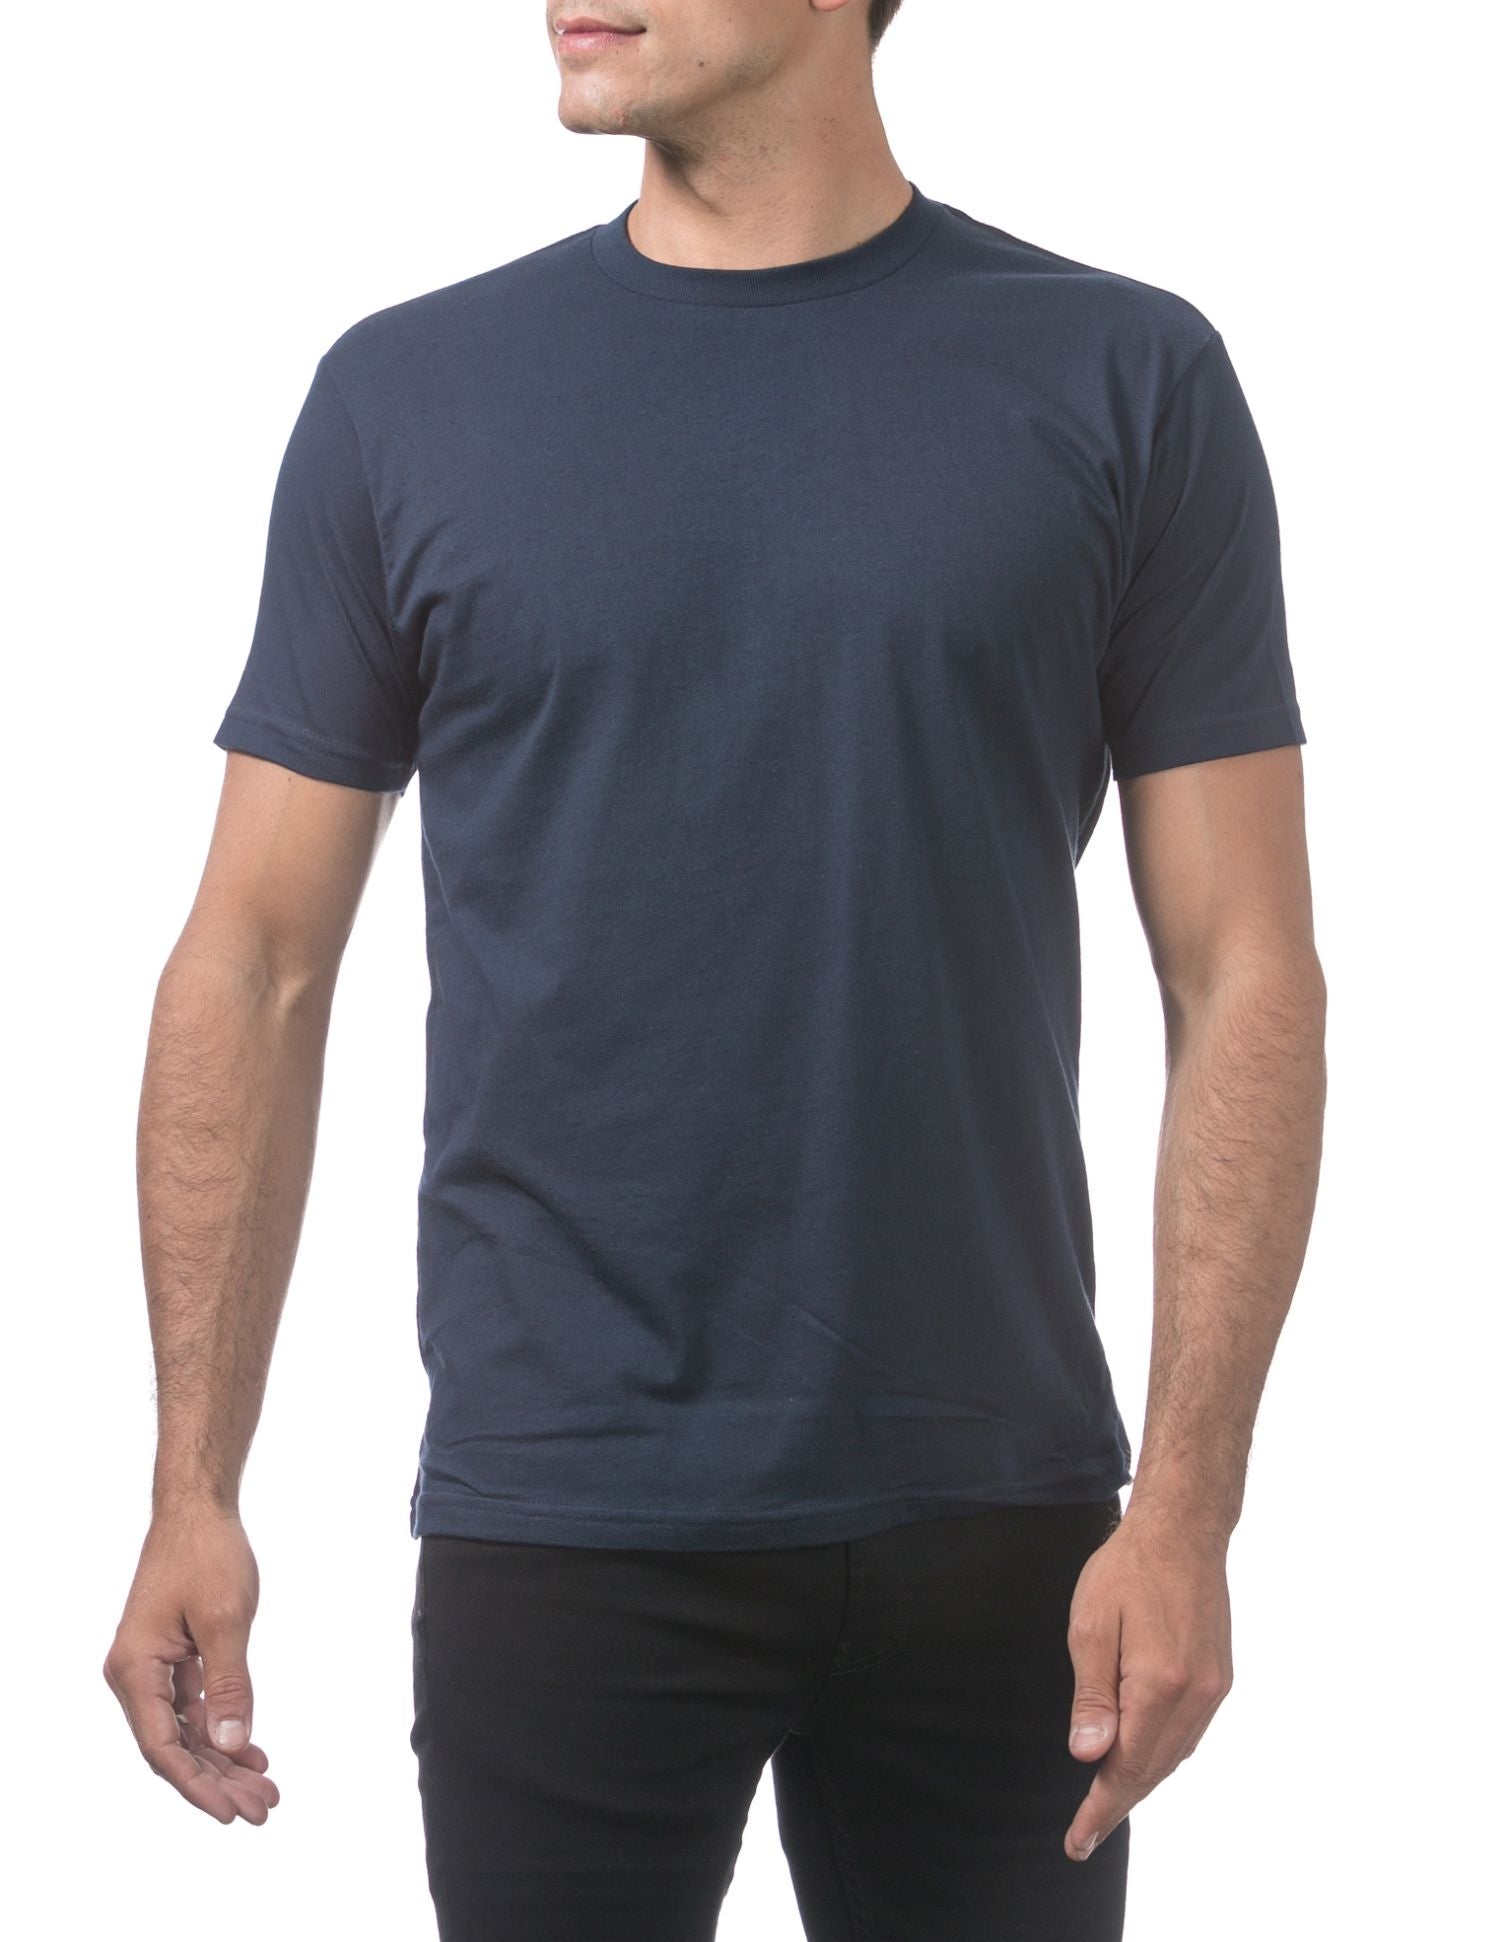 Pro Club Men's Comfort Cotton Short Sleeve T-Shirt - Navy Blue - X-Large - Pro-Distributing